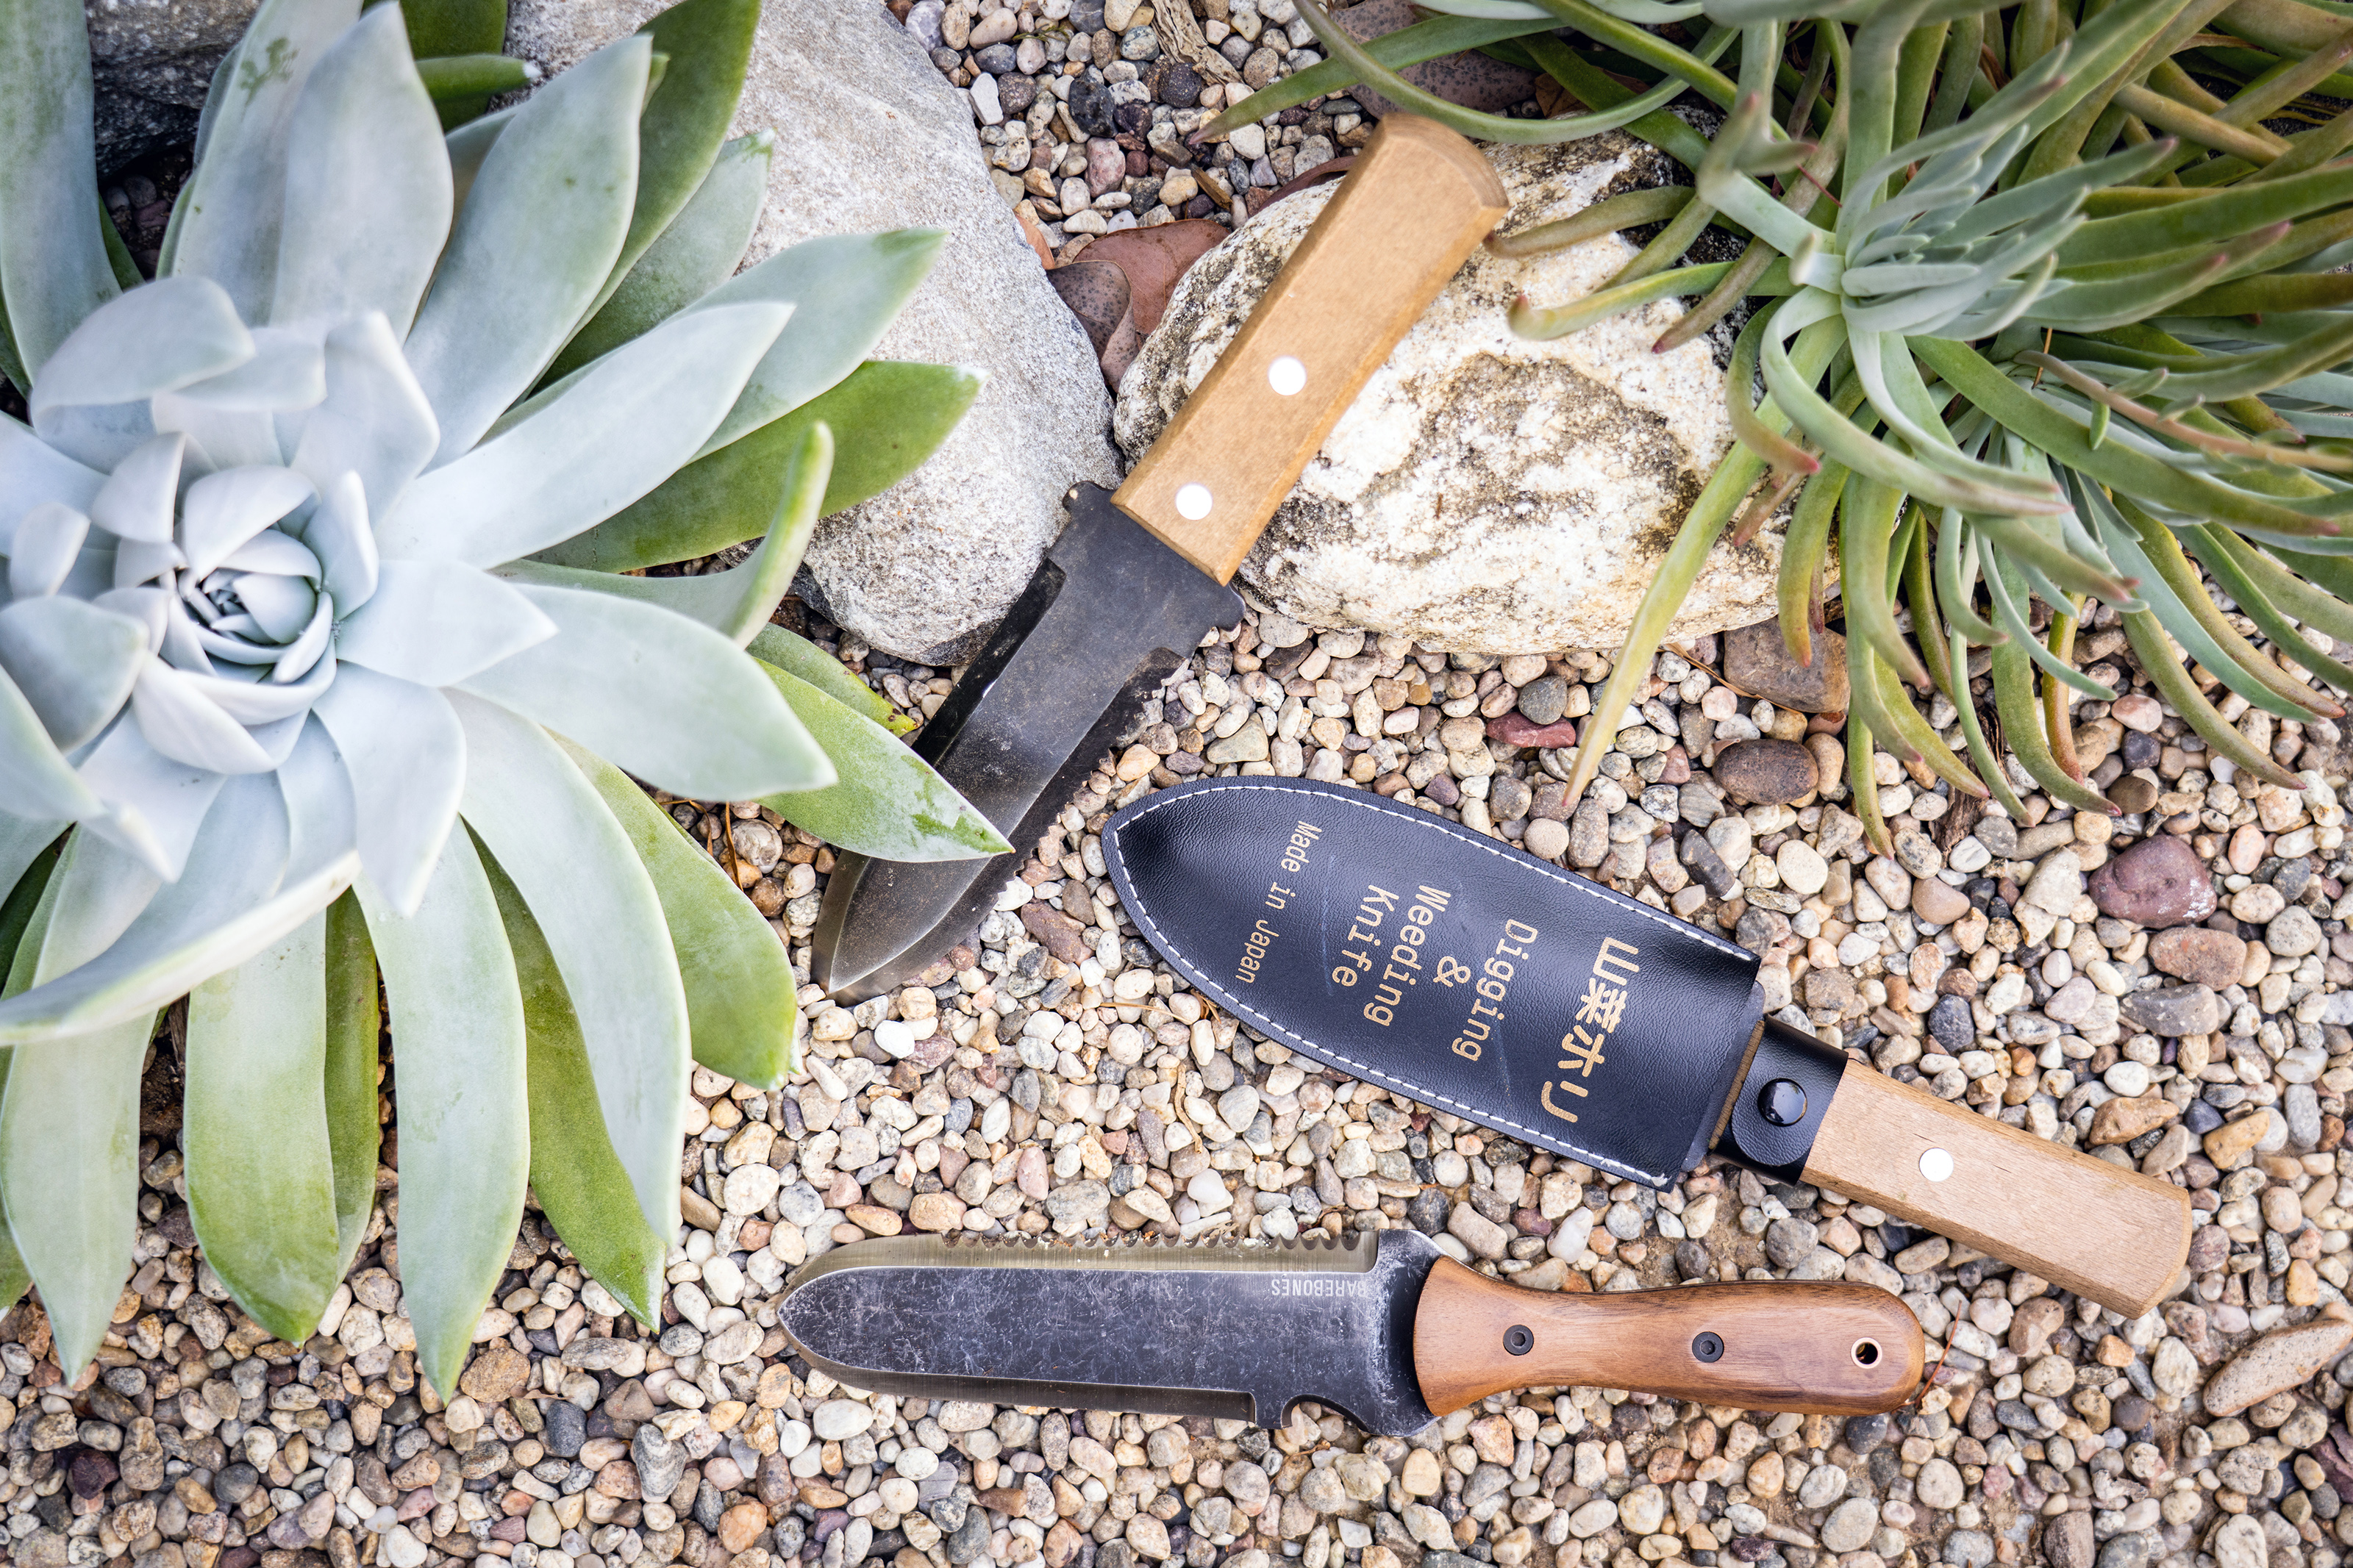 Breck's Garden Tools: Rosewood Pruners & Hori Hori Knife (Review